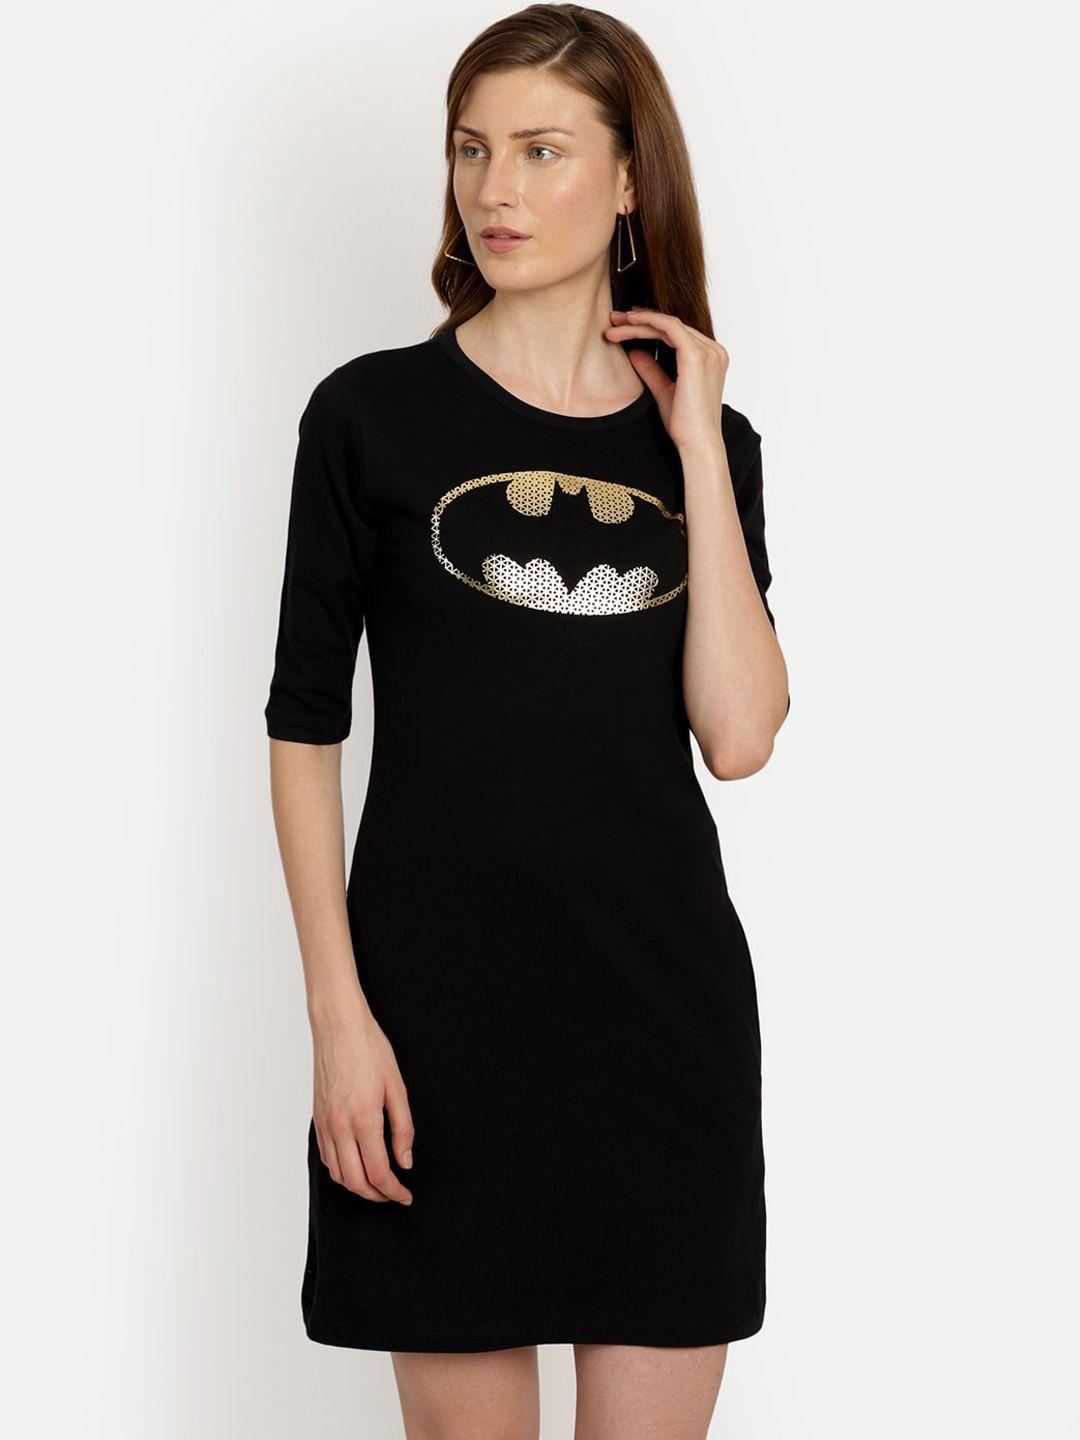 free authority women black batman printed t-shirt dress